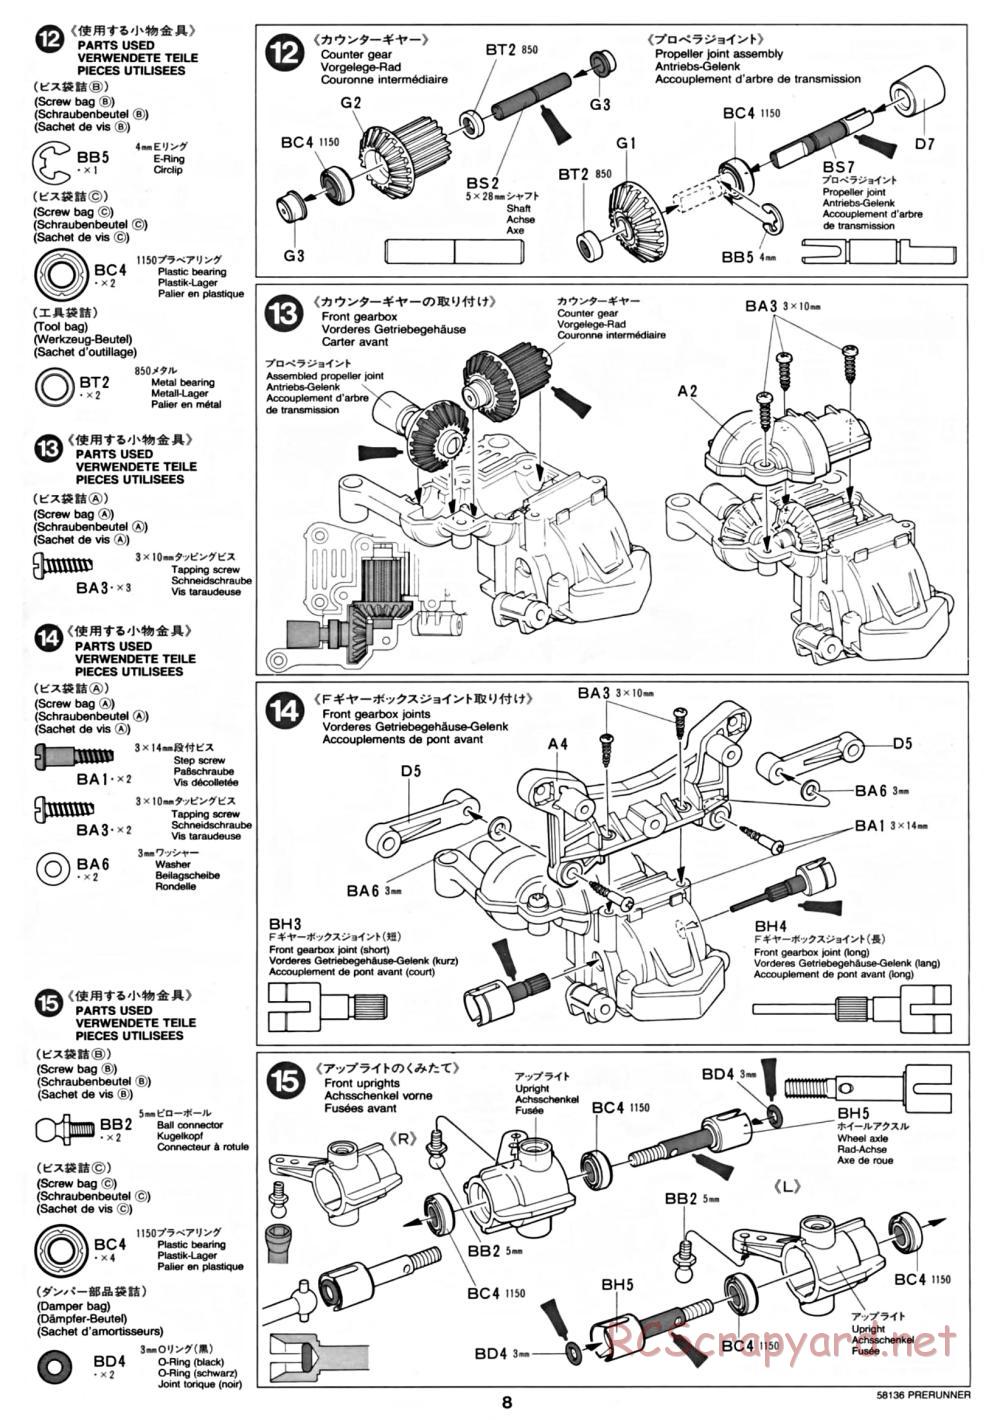 Tamiya - Toyota Prerunner Chassis - Manual - Page 8